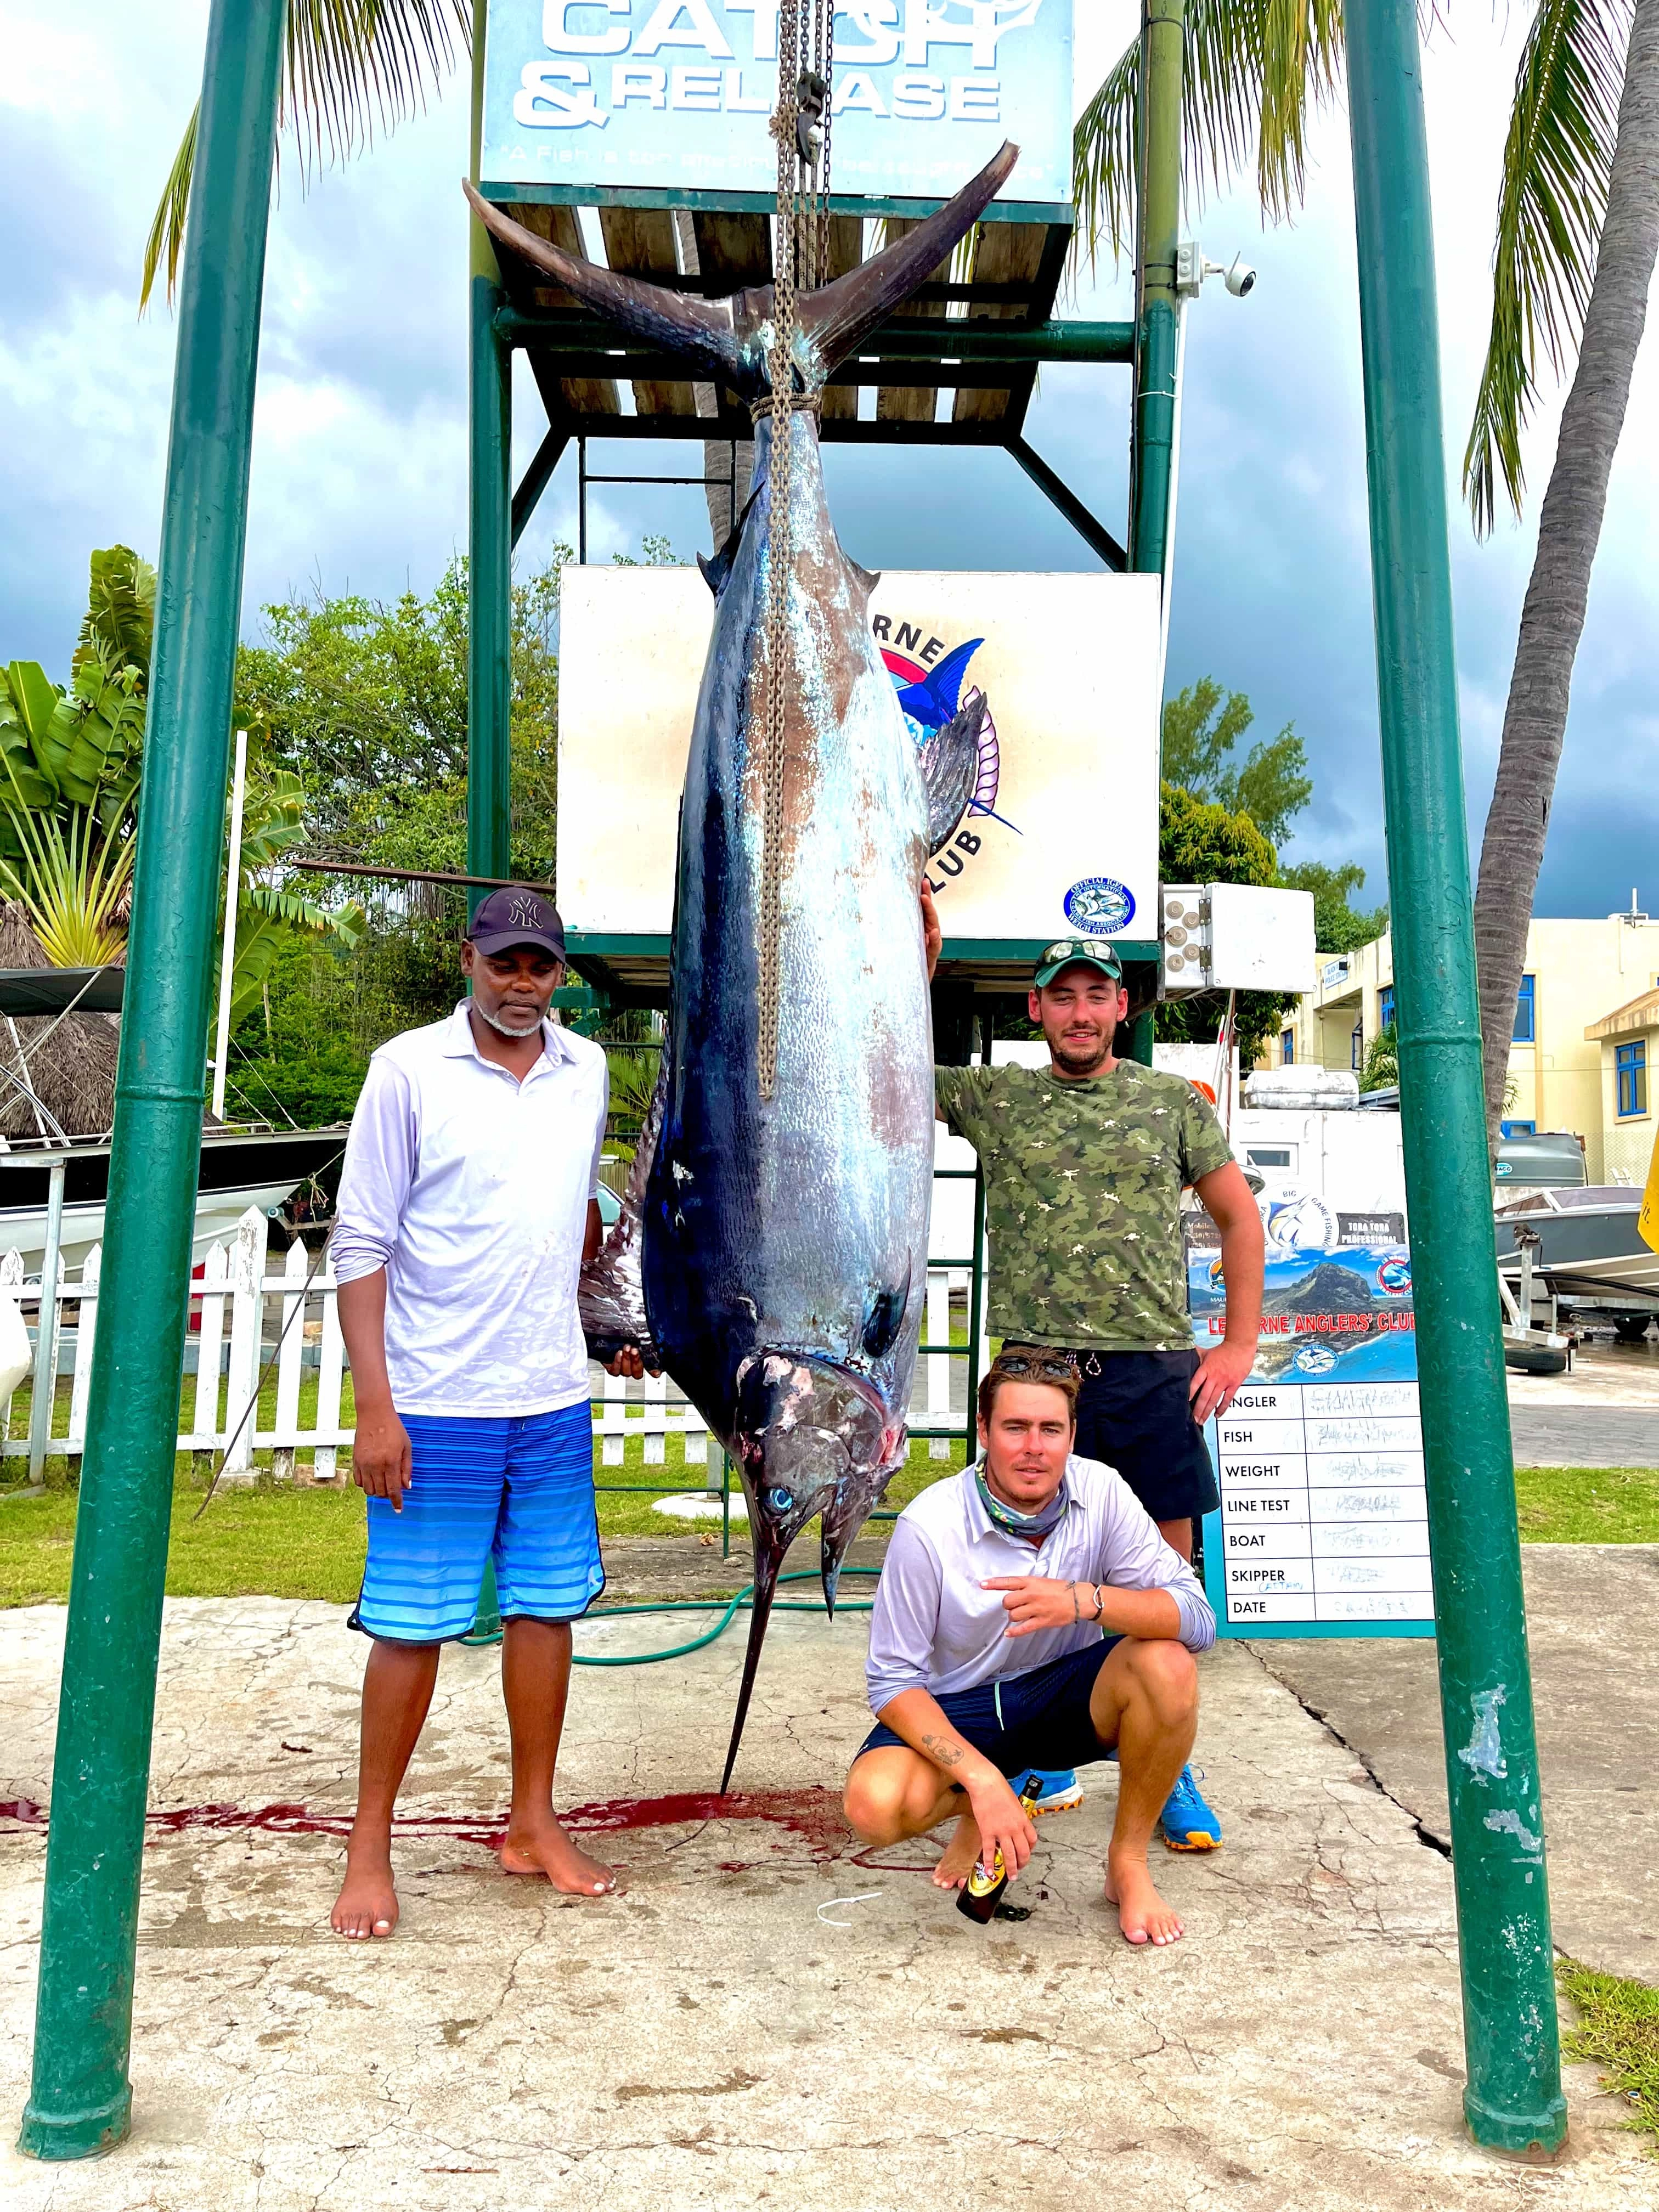 Deep Sea Fishing Mauritius